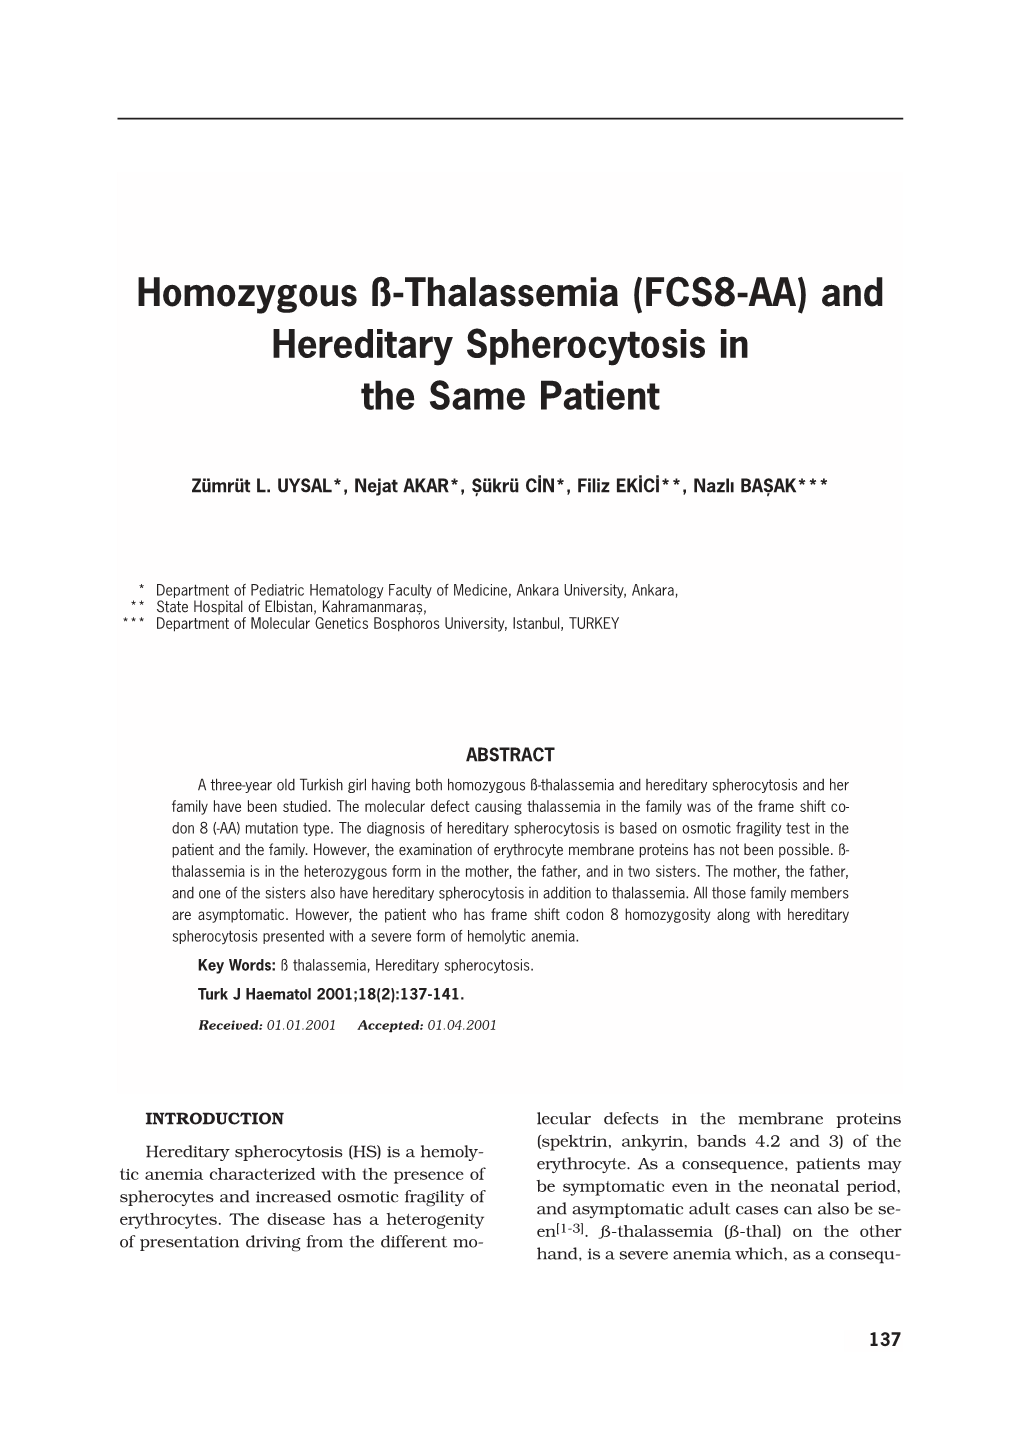 137-141 Homozygous ß-Thalassemia (FCS8-AA) and Hereditary Spherocytosis in the Same Patient Uysal ZL, Akar N, Cin ﬁ, Ekici F, Baﬂak N